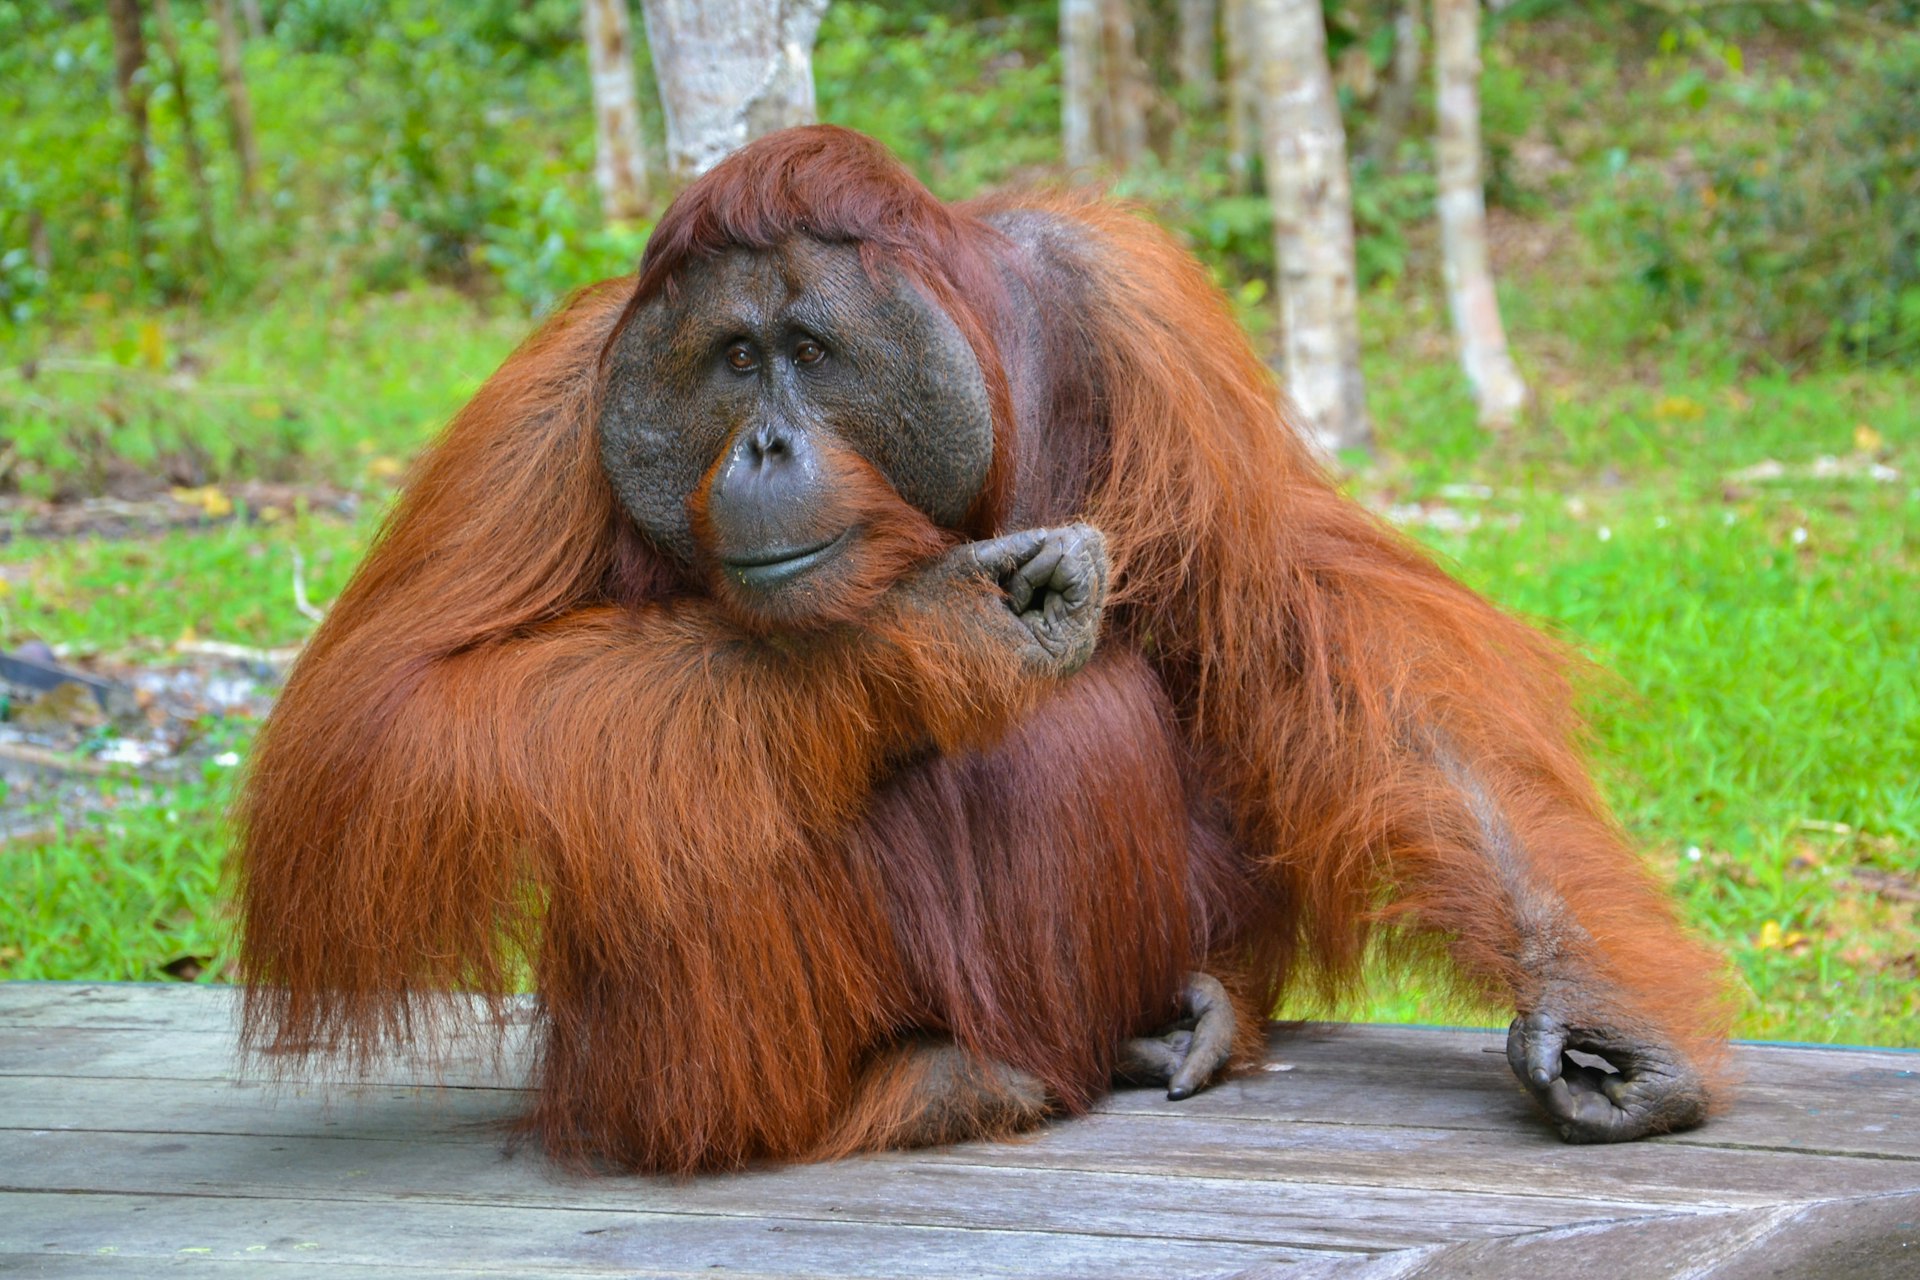 An orangutan sitting on a wooden bench at Tanjung Puting National Park